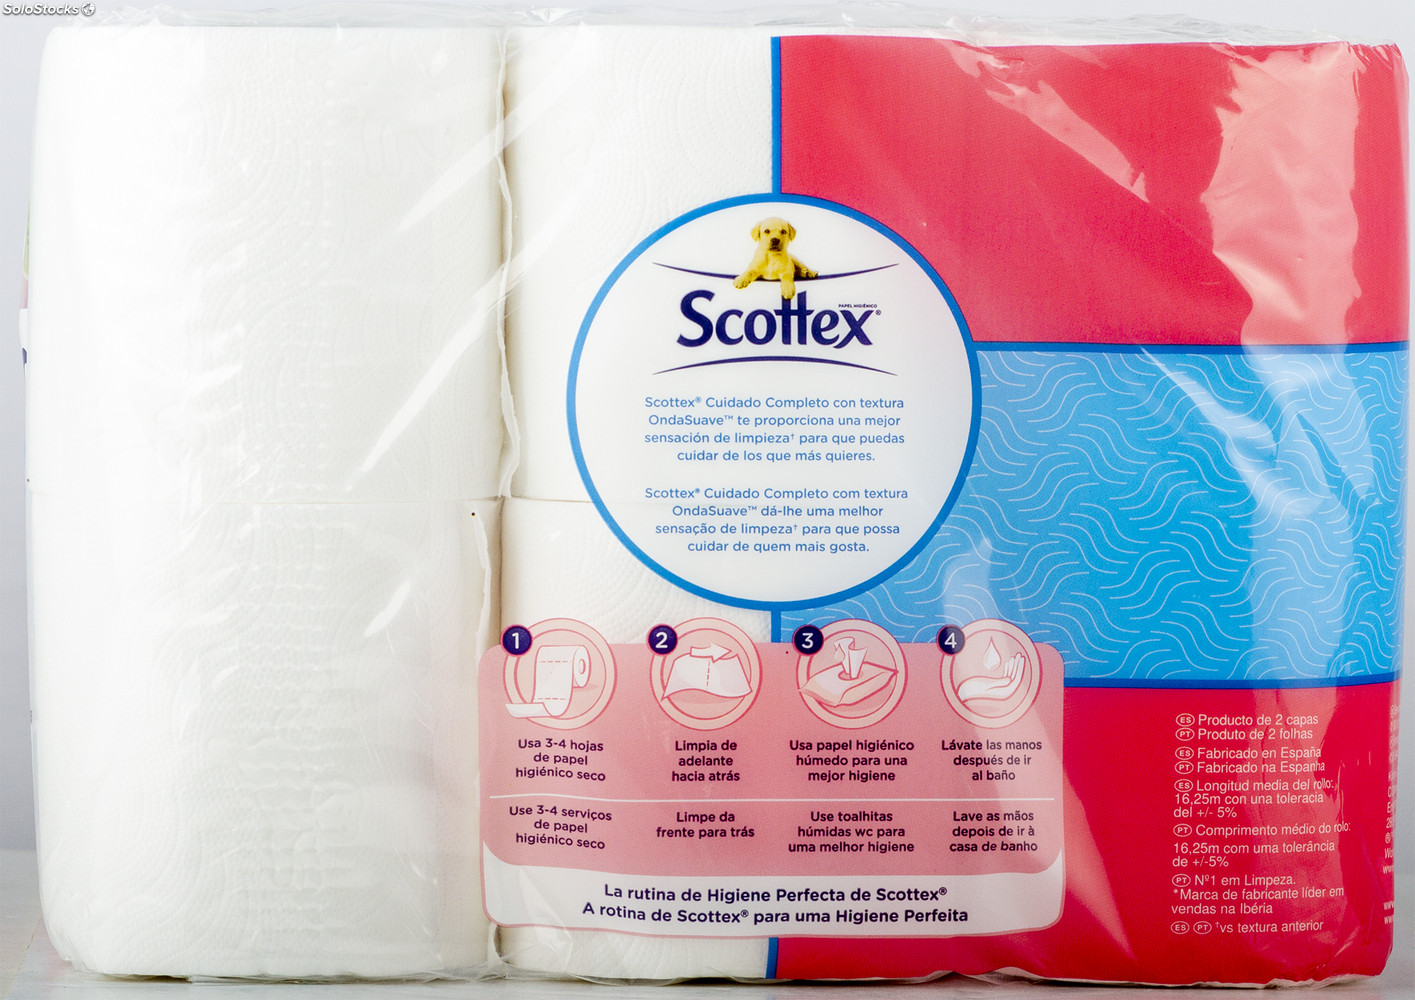 Scottex Original Papel Higiénico 96 rollos, 6 packs de 16 rollos